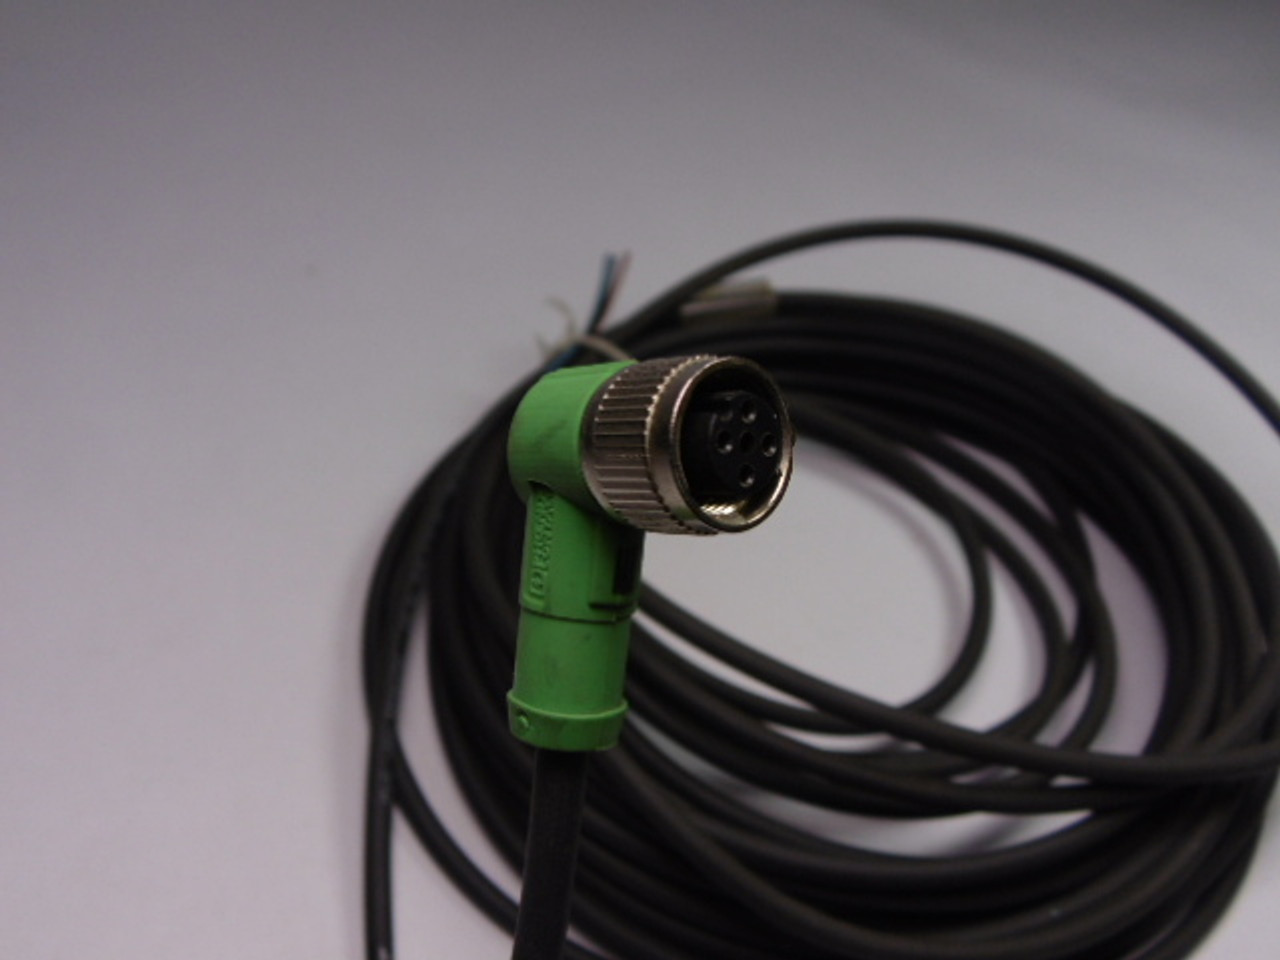 Phoenix Contact 1536434 Sensor/Actuator Cable USED